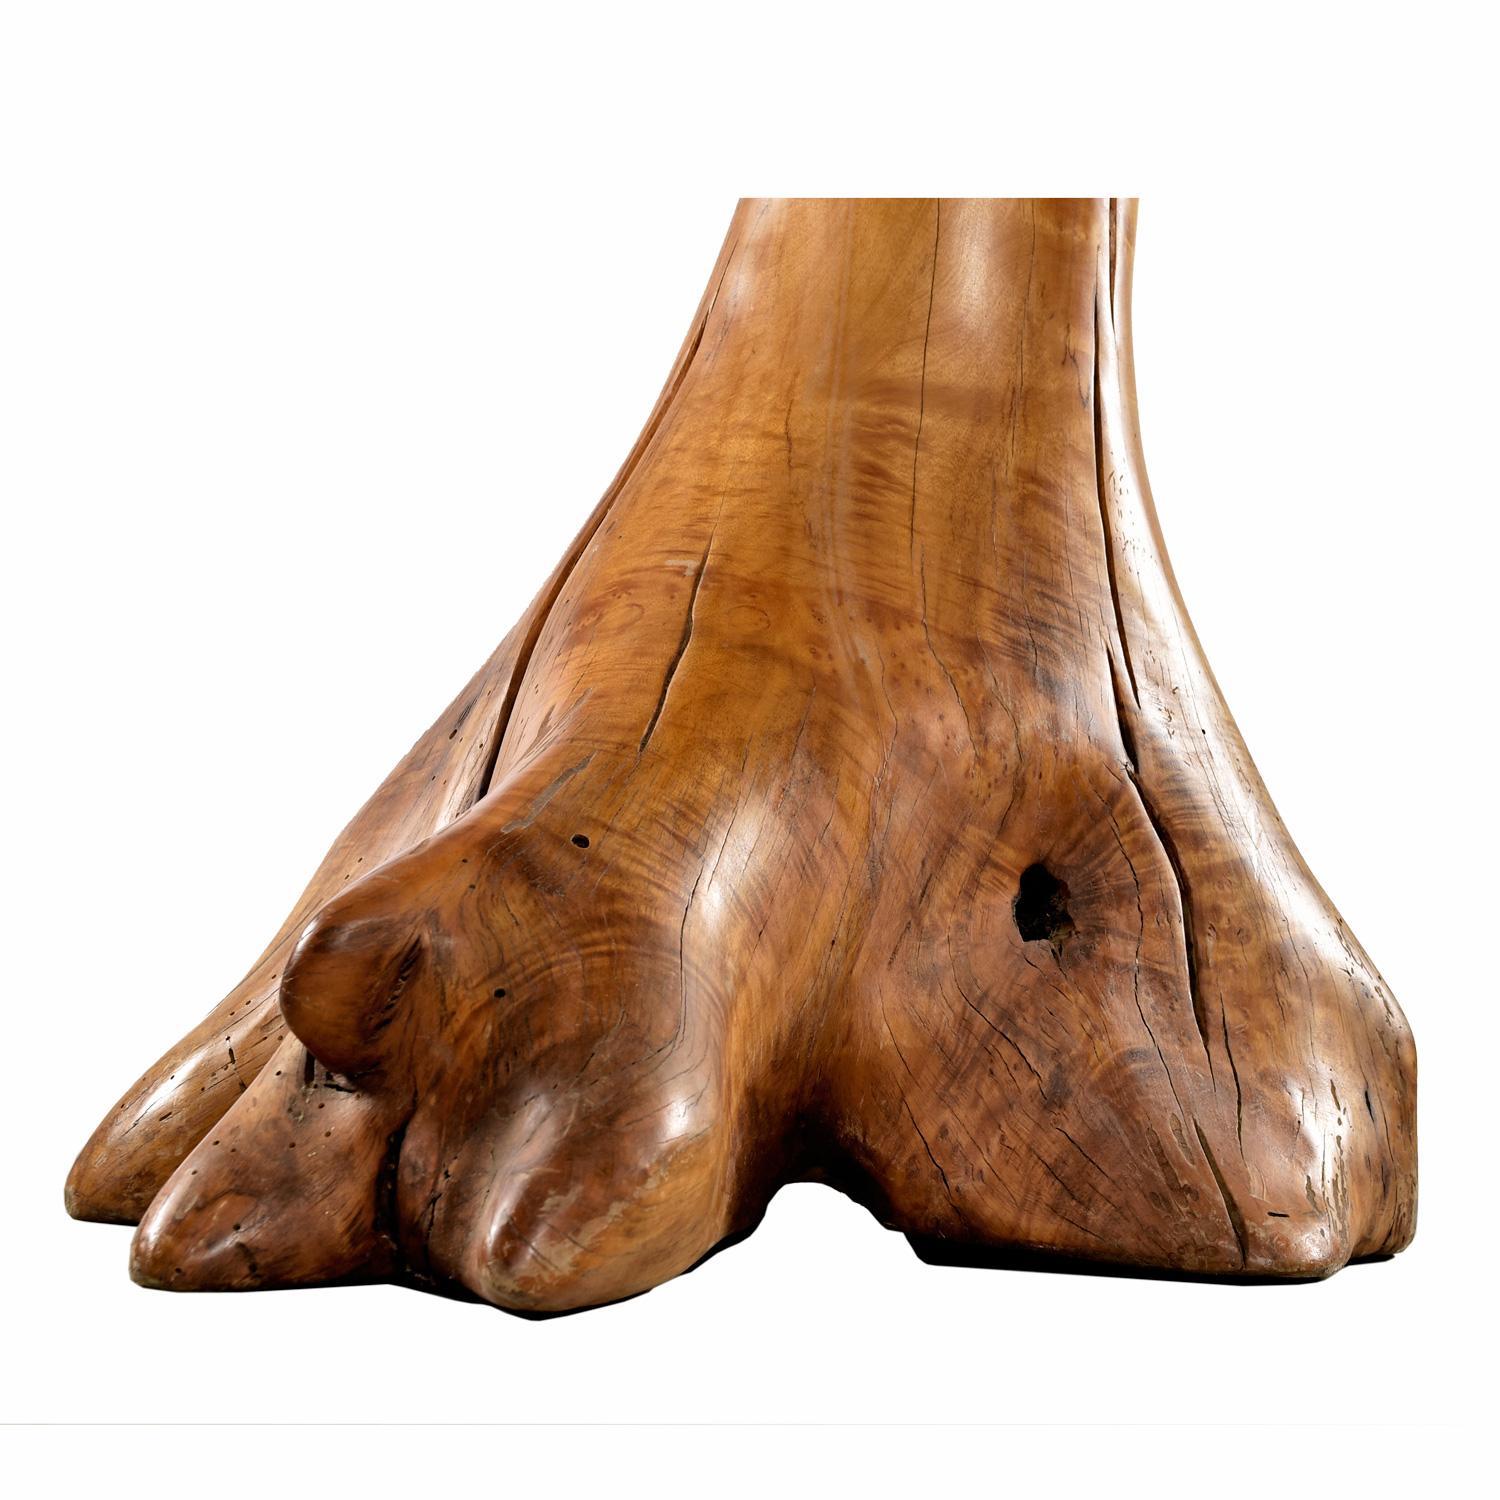 Giant 8-Foot Tall Tree Trunk Mushroom Floor Lamp with Burl Knot Wood Shade 6